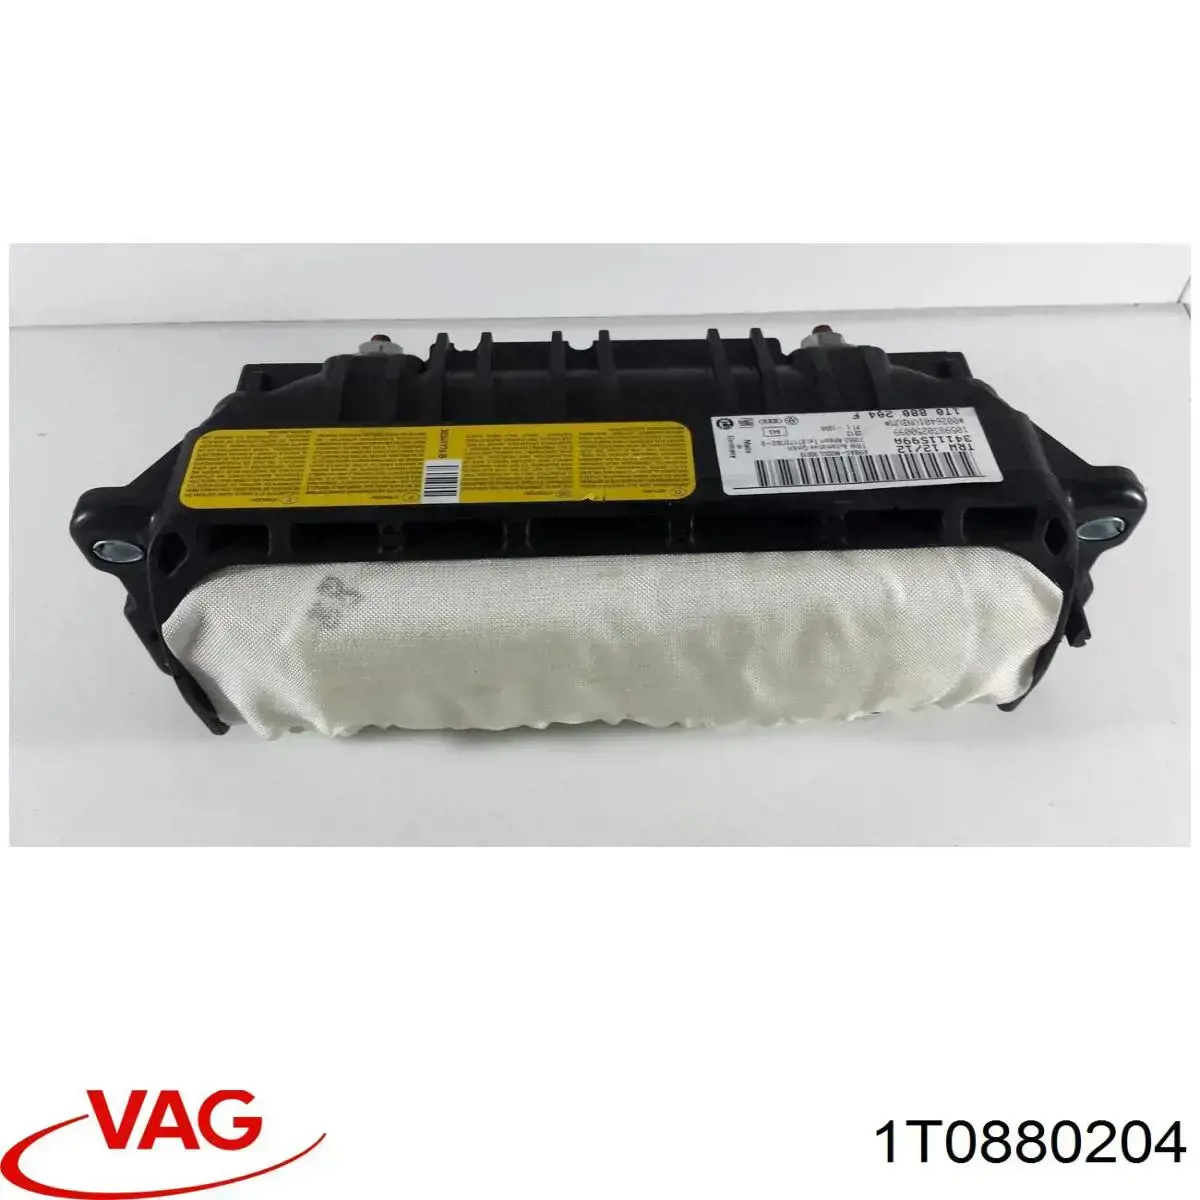 1T0880204 VAG подушка безопасности (airbag пассажирская)